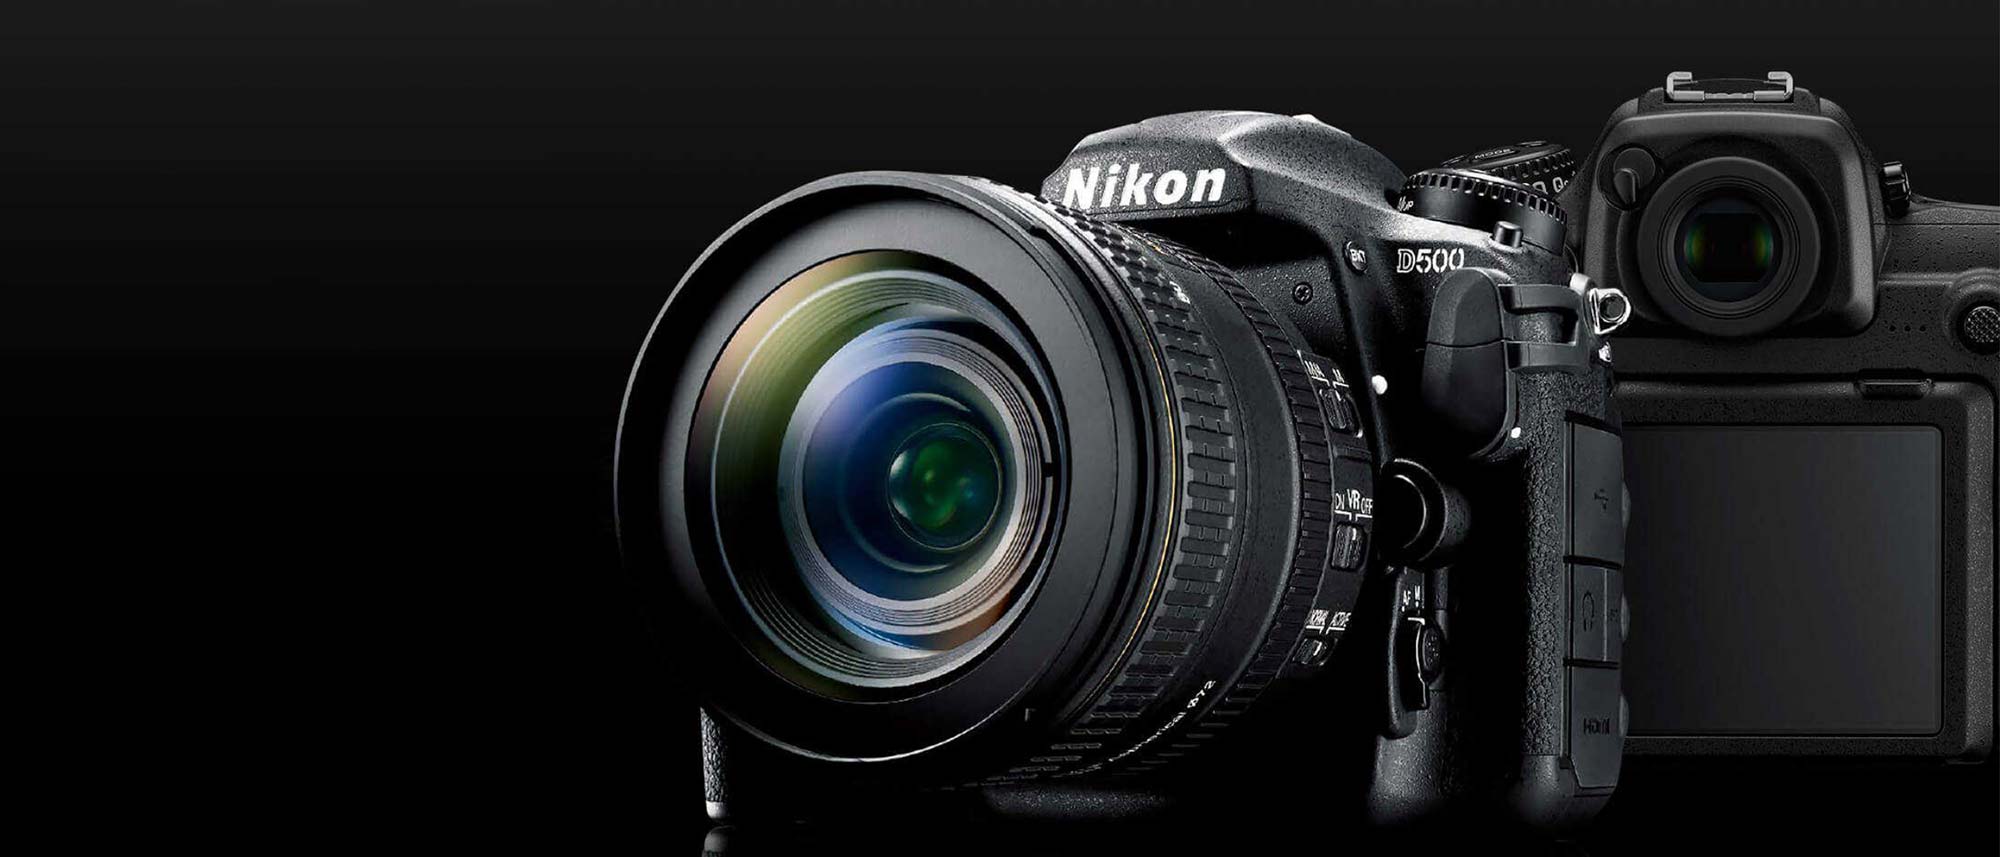 Video: Nikon D500 DSLR Camera Video Review